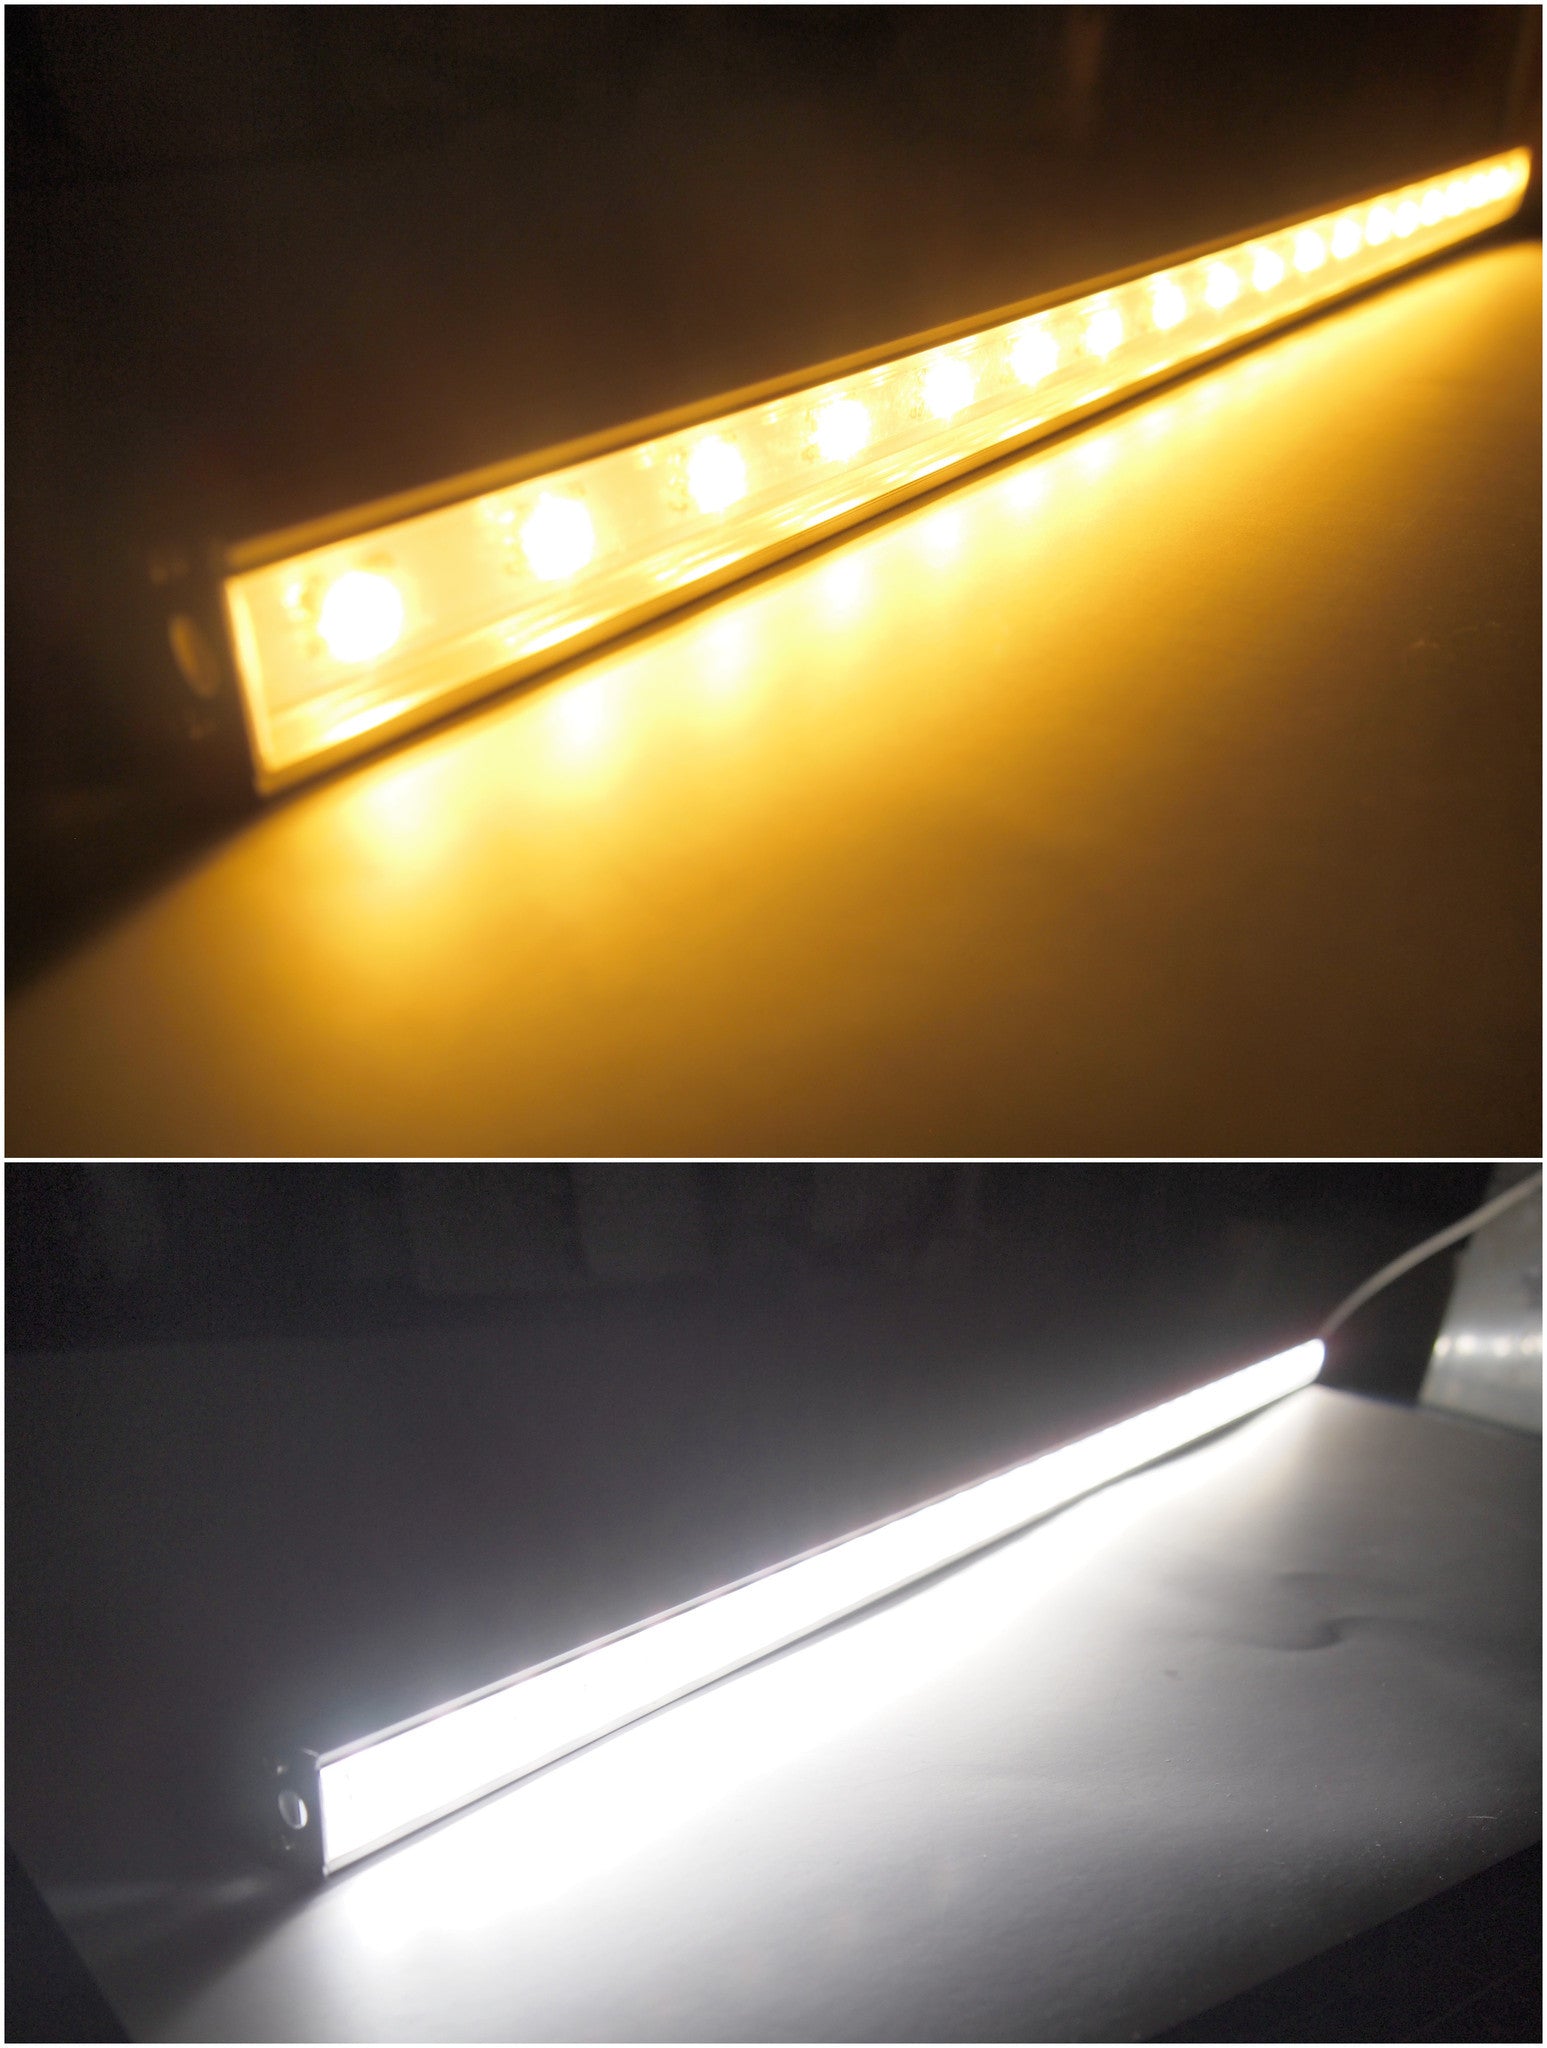 12 LED Rigid 4W Light Hard Bar Aluminum Strip 12V-24V 5050 LED Bright, Warm White